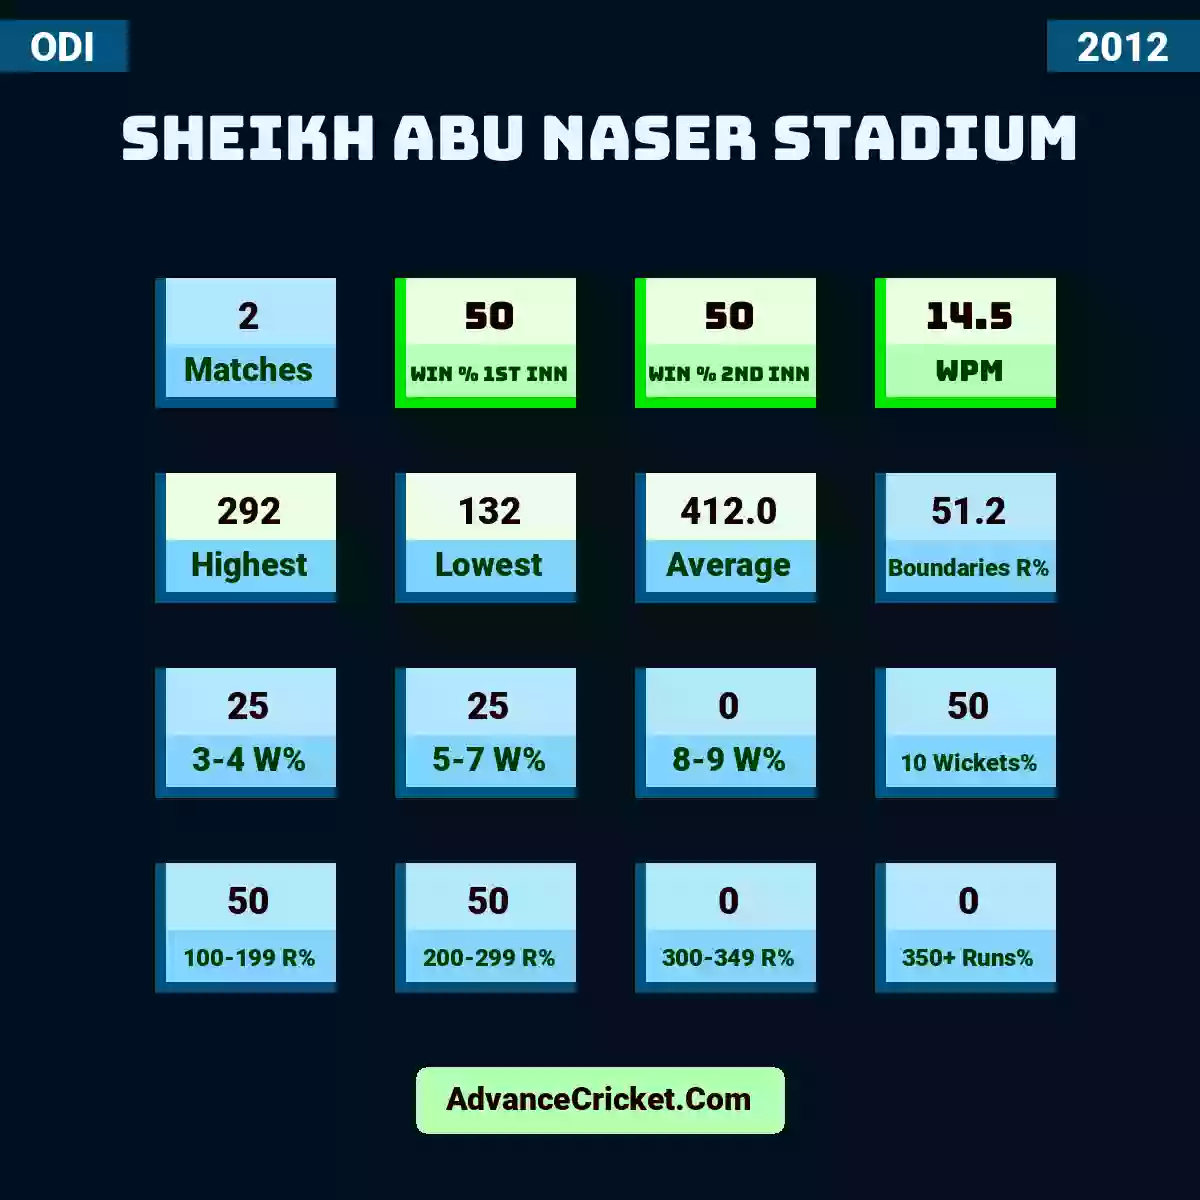 Image showing Sheikh Abu Naser Stadium with Matches: 2, Win % 1st Inn: 50, Win % 2nd Inn: 50, WPM: 14.5, Highest: 292, Lowest: 132, Average: 412.0, Boundaries R%: 51.2, 3-4 W%: 25, 5-7 W%: 25, 8-9 W%: 0, 10 Wickets%: 50, 100-199 R%: 50, 200-299 R%: 50, 300-349 R%: 0, 350+ Runs%: 0.